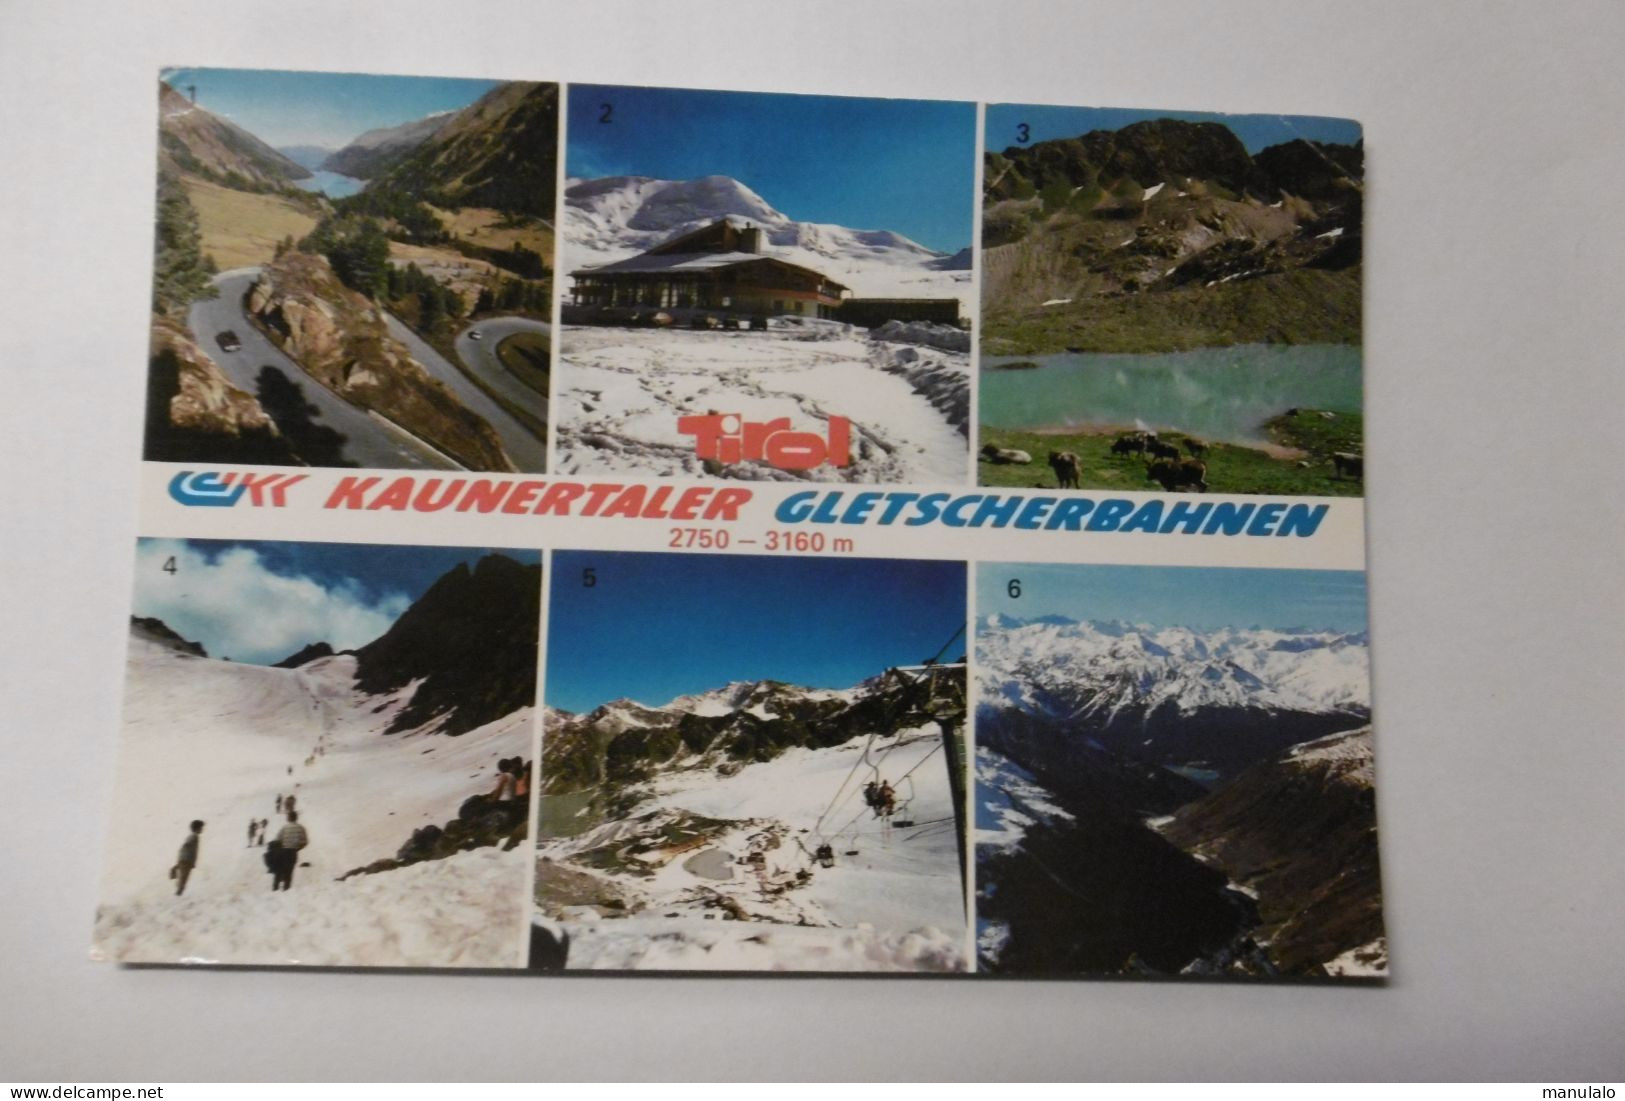 Kaunertaler Gletscherbahnen - - Kaunertal